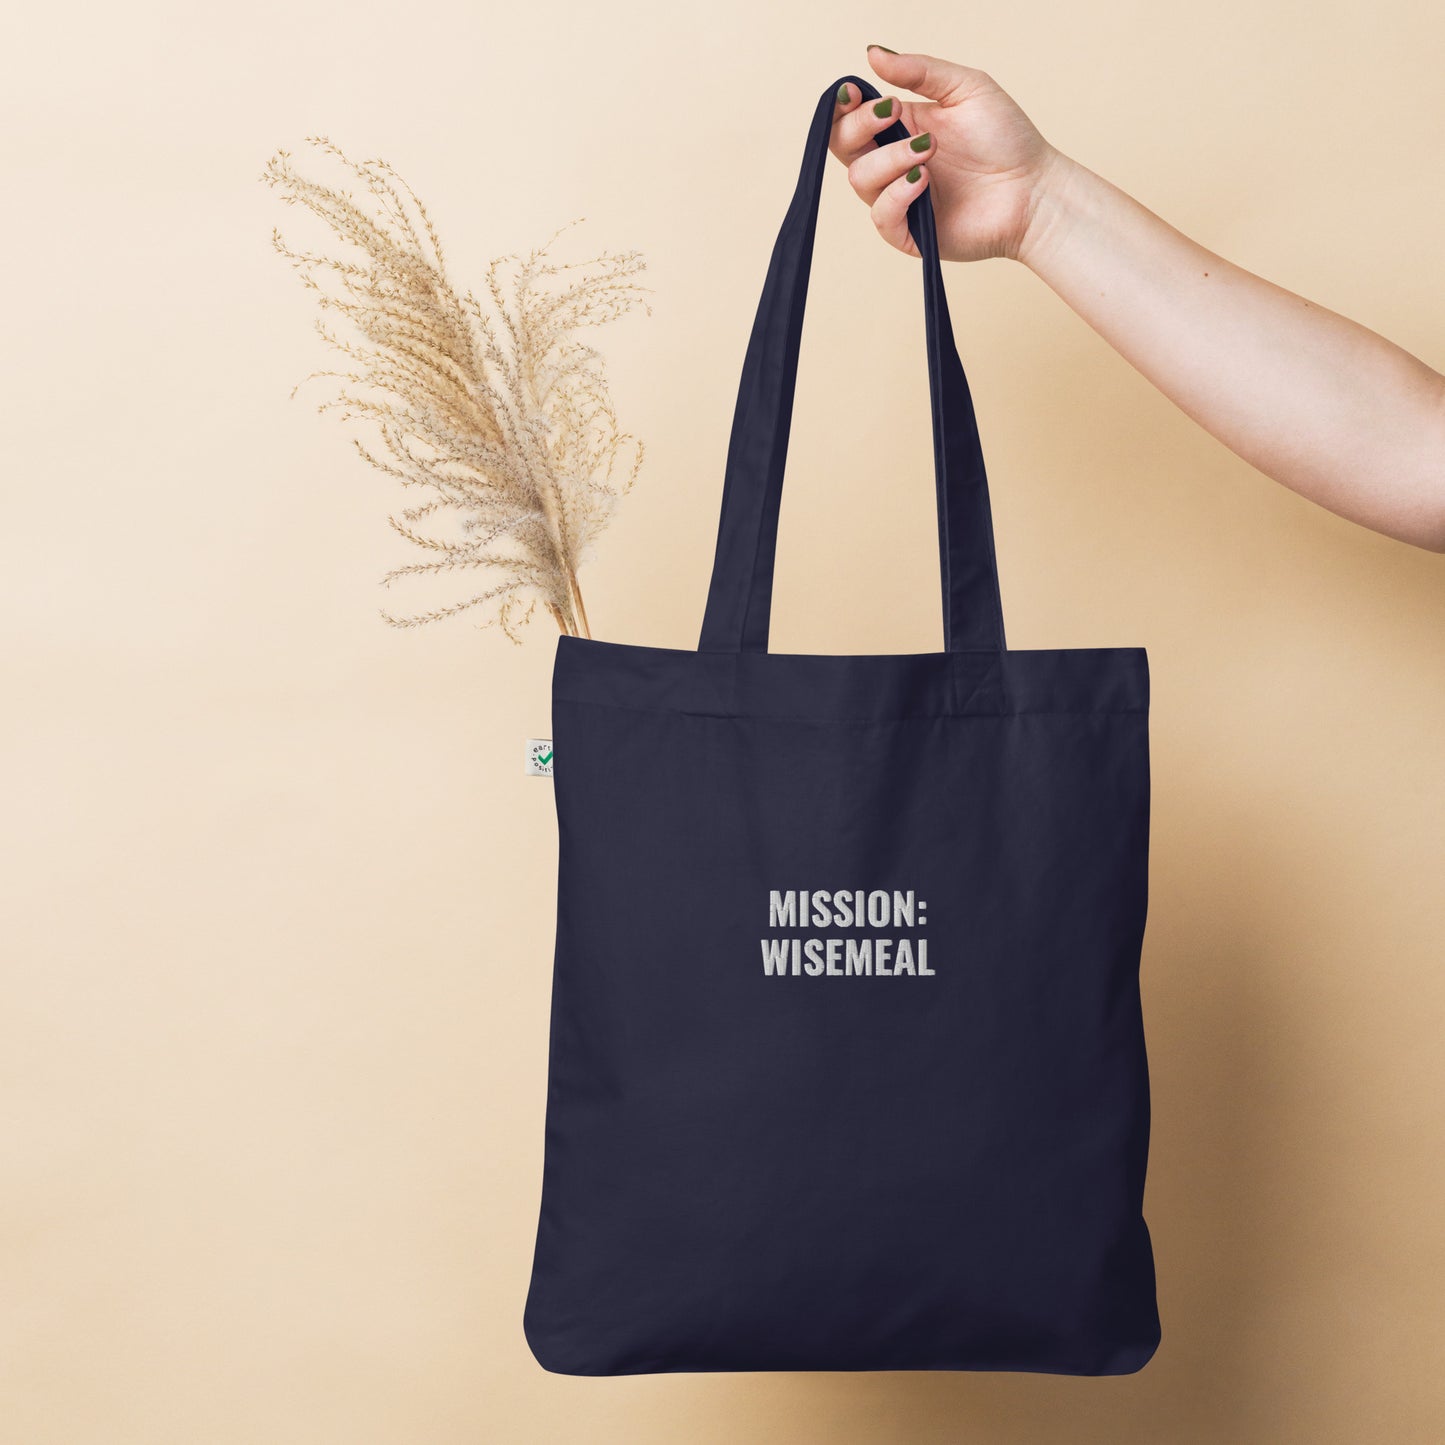 Organic fashion tote bag "Mission: WISEMEAL"